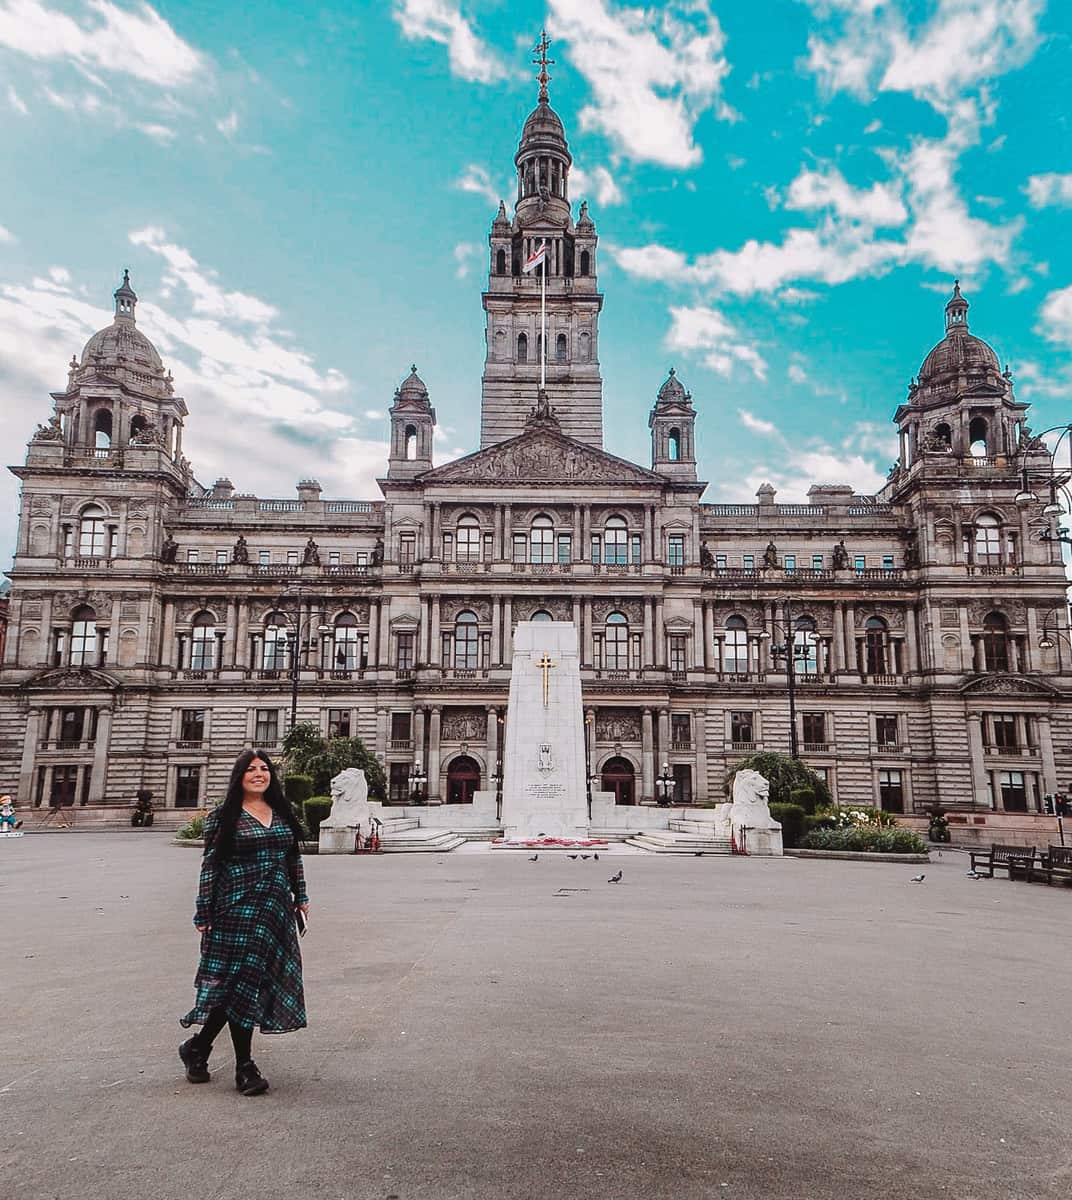 George Square Glasgow | Outlander locations in Glasgow